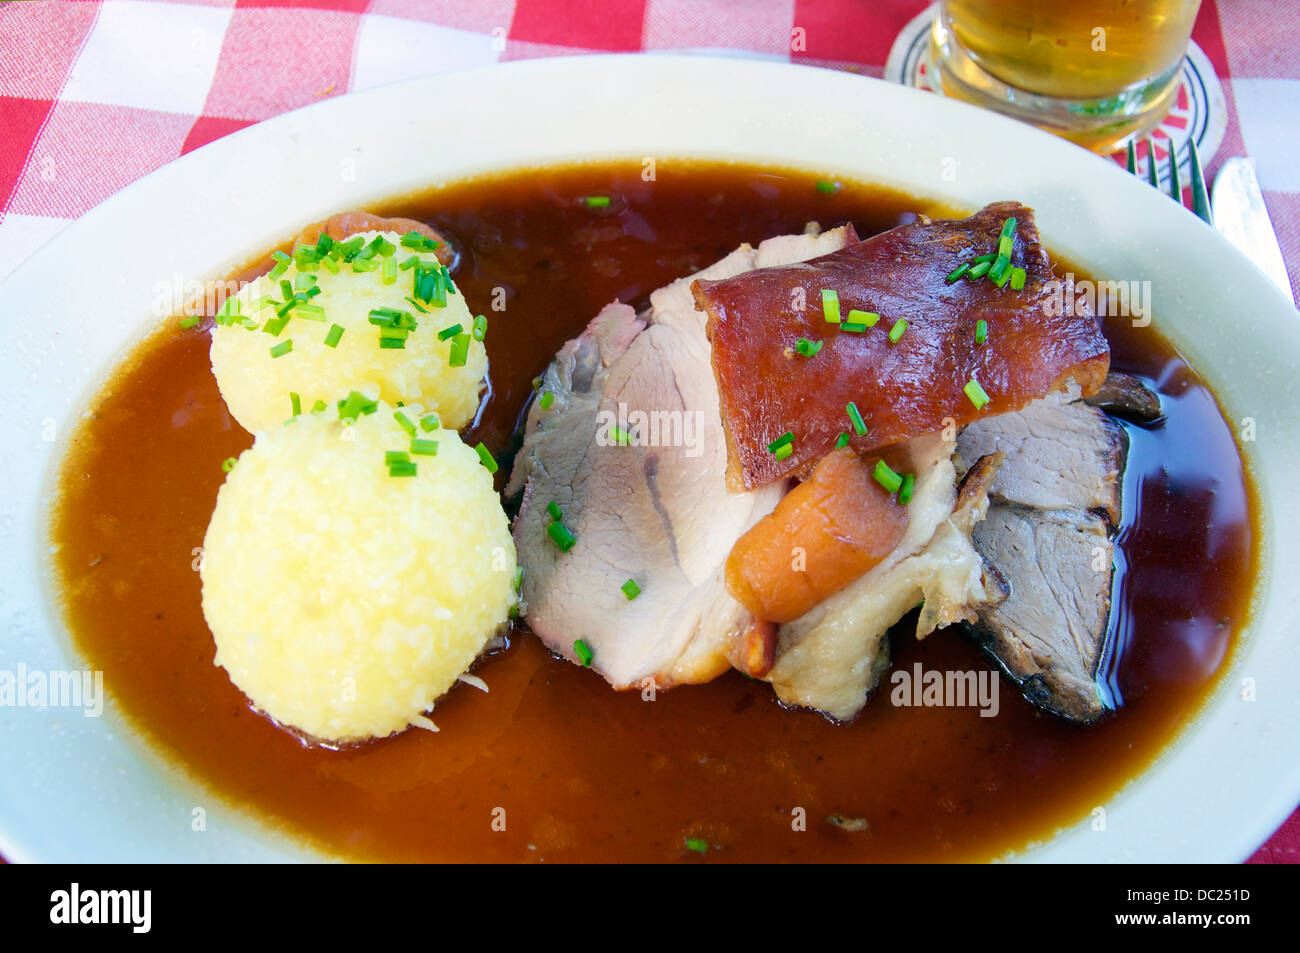 Roast pork with potato dumplings is a popular dish in Bavaria, especially in a beer garden. Stock Photo